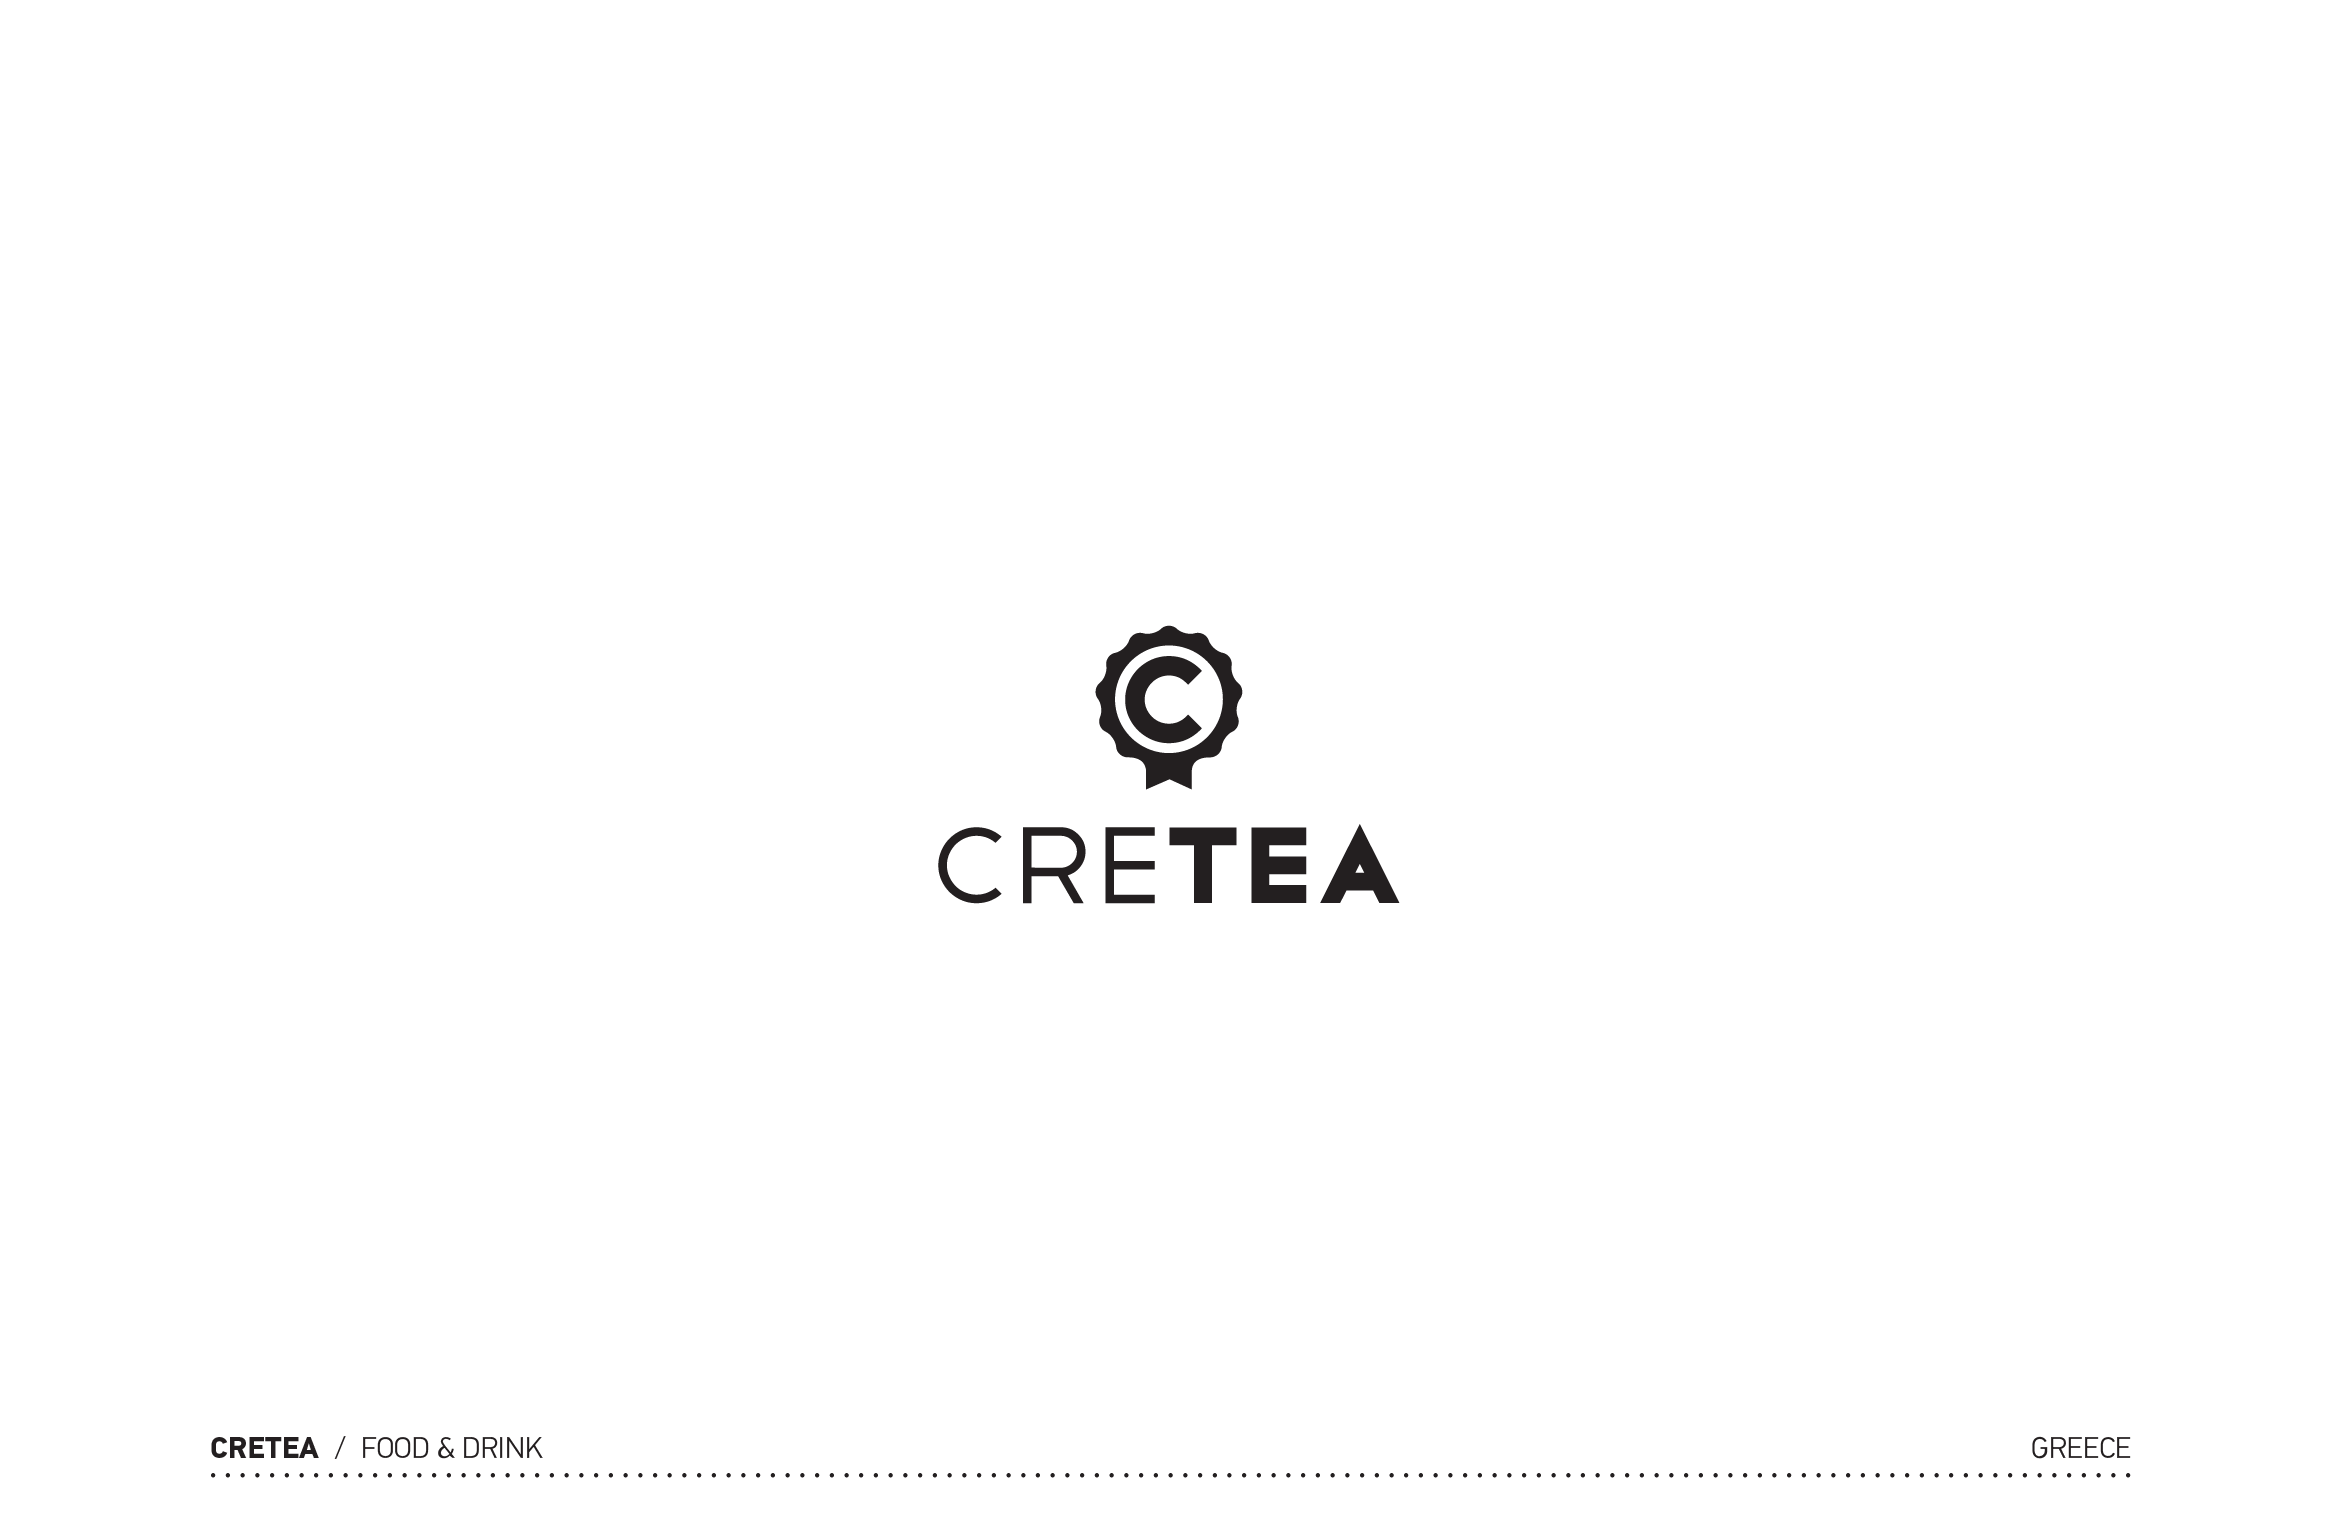 Cretea Logotype by Dot Creative Studio